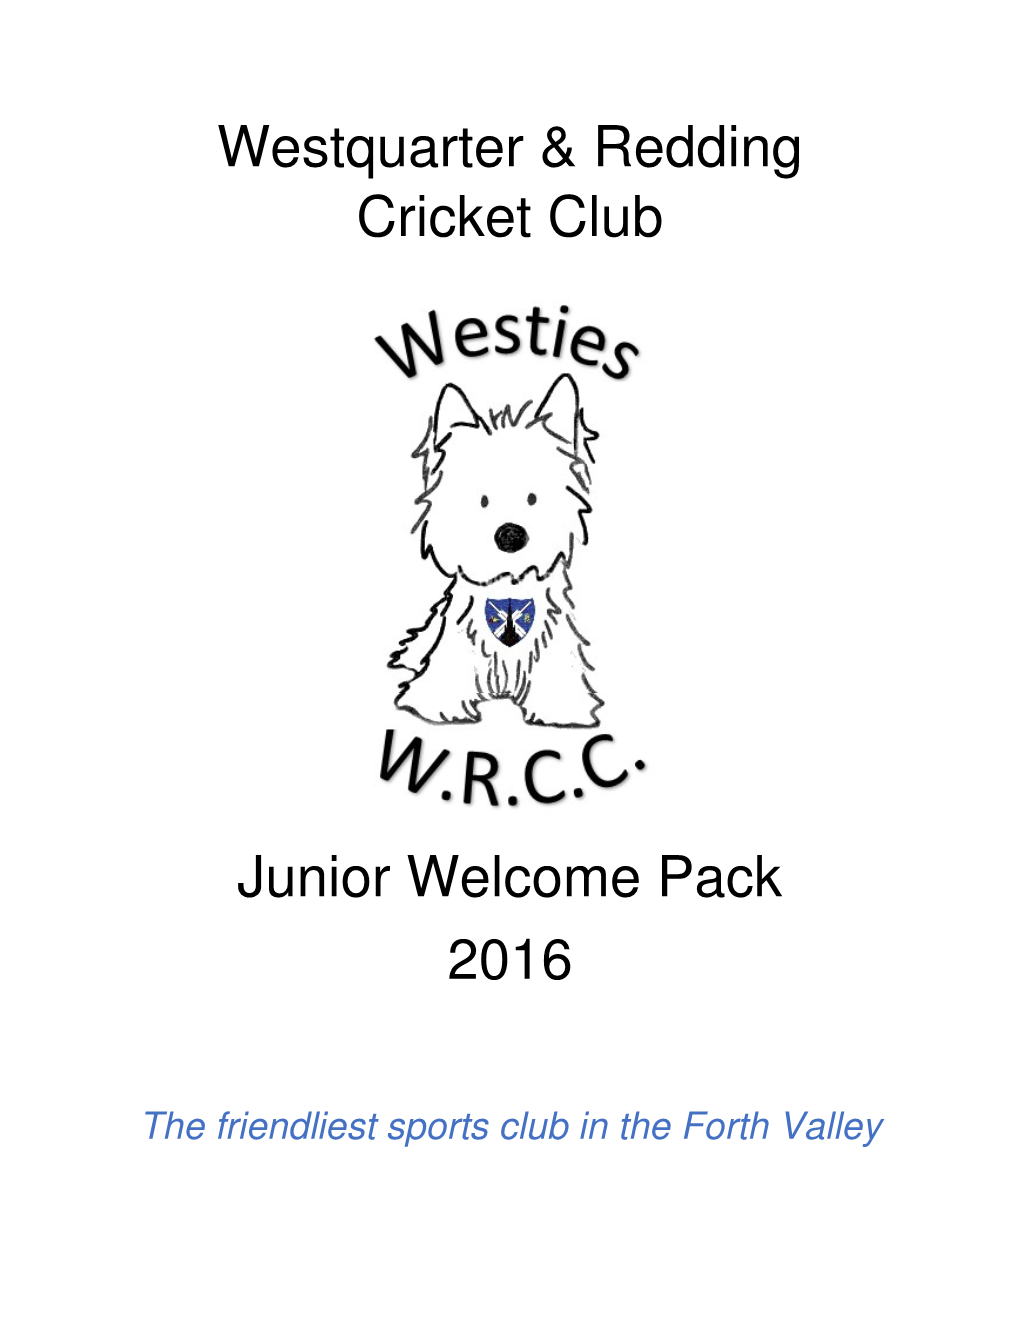 Westquarter & Redding Cricket Club Junior Welcome Pack 2016